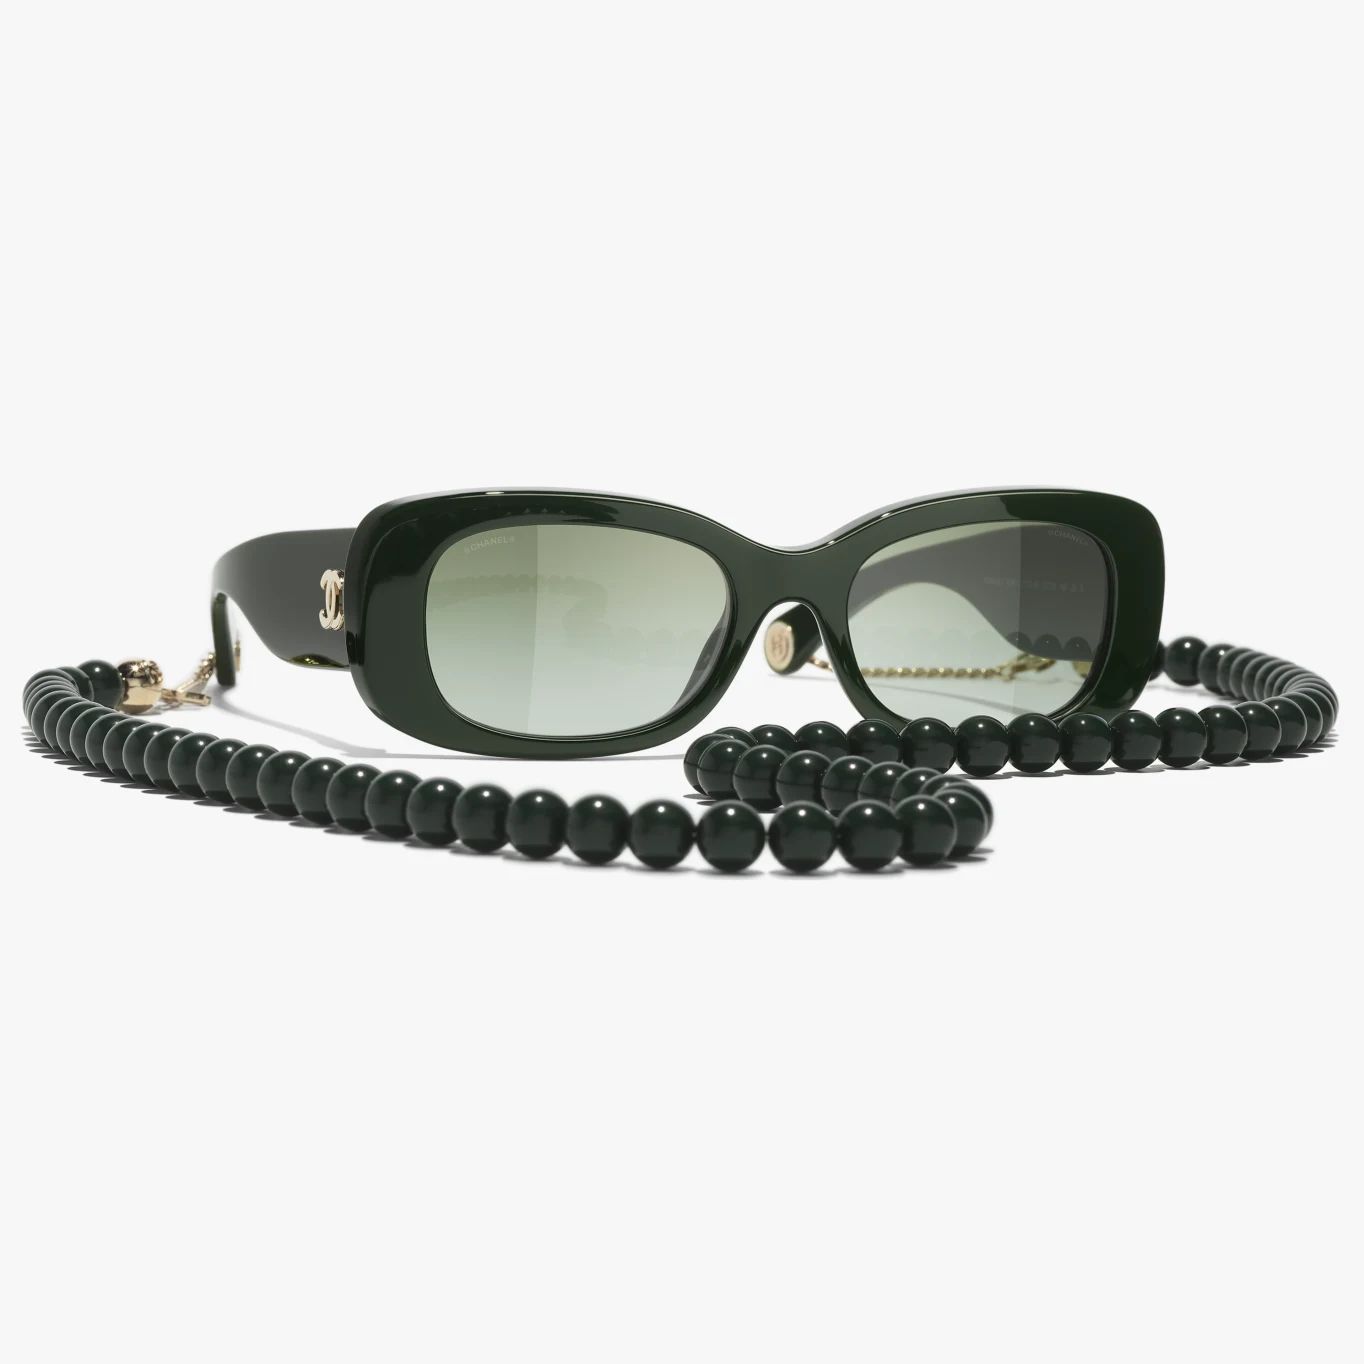 Sunglasses: Rectangle Sunglasses, acetate — Fashion | CHANEL | Chanel, Inc. (US)